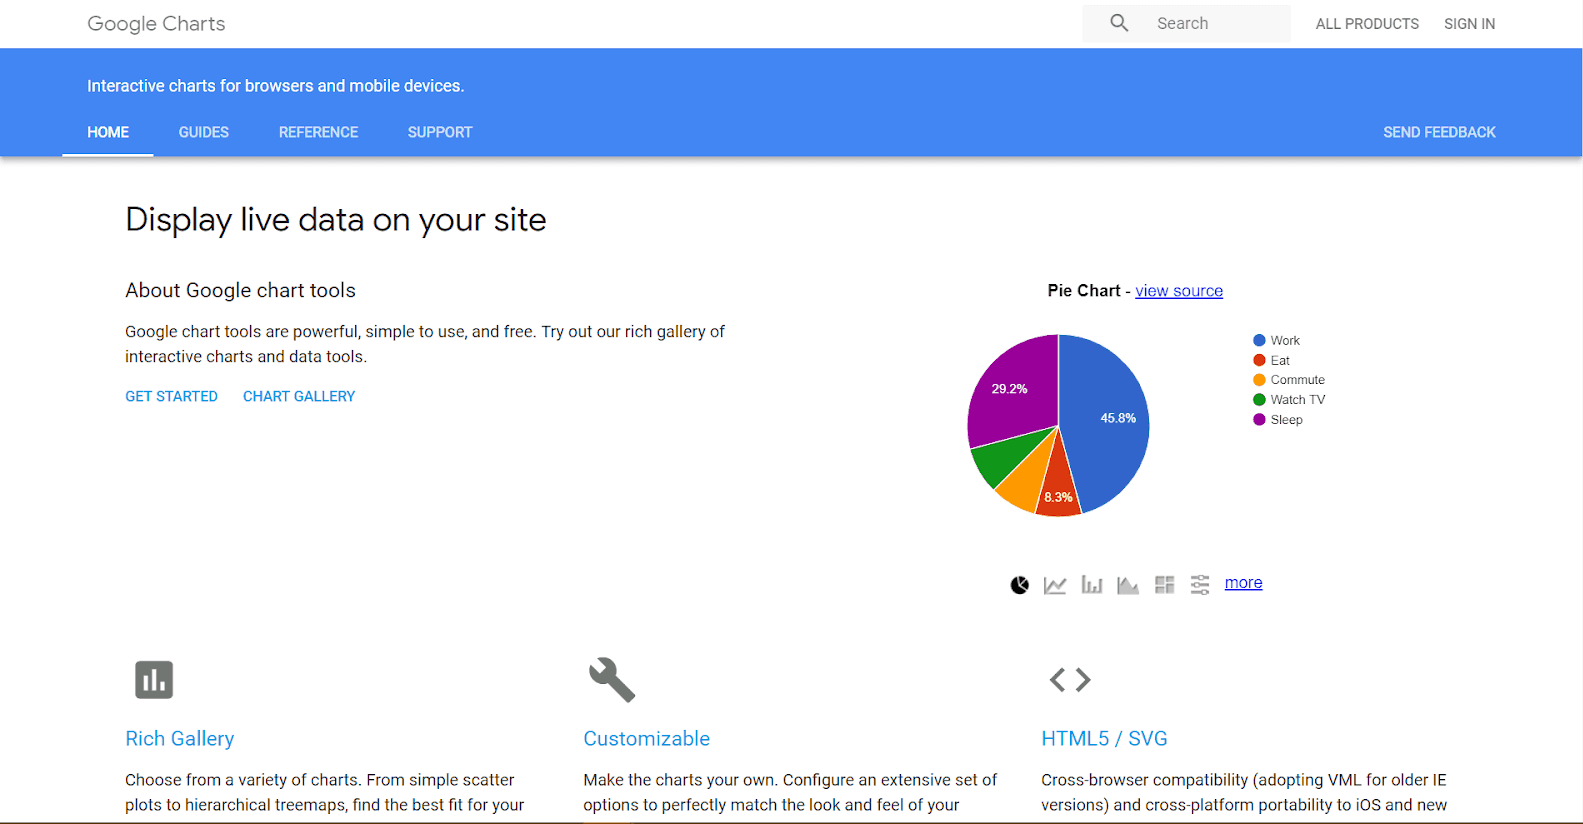 Google Charts Tools